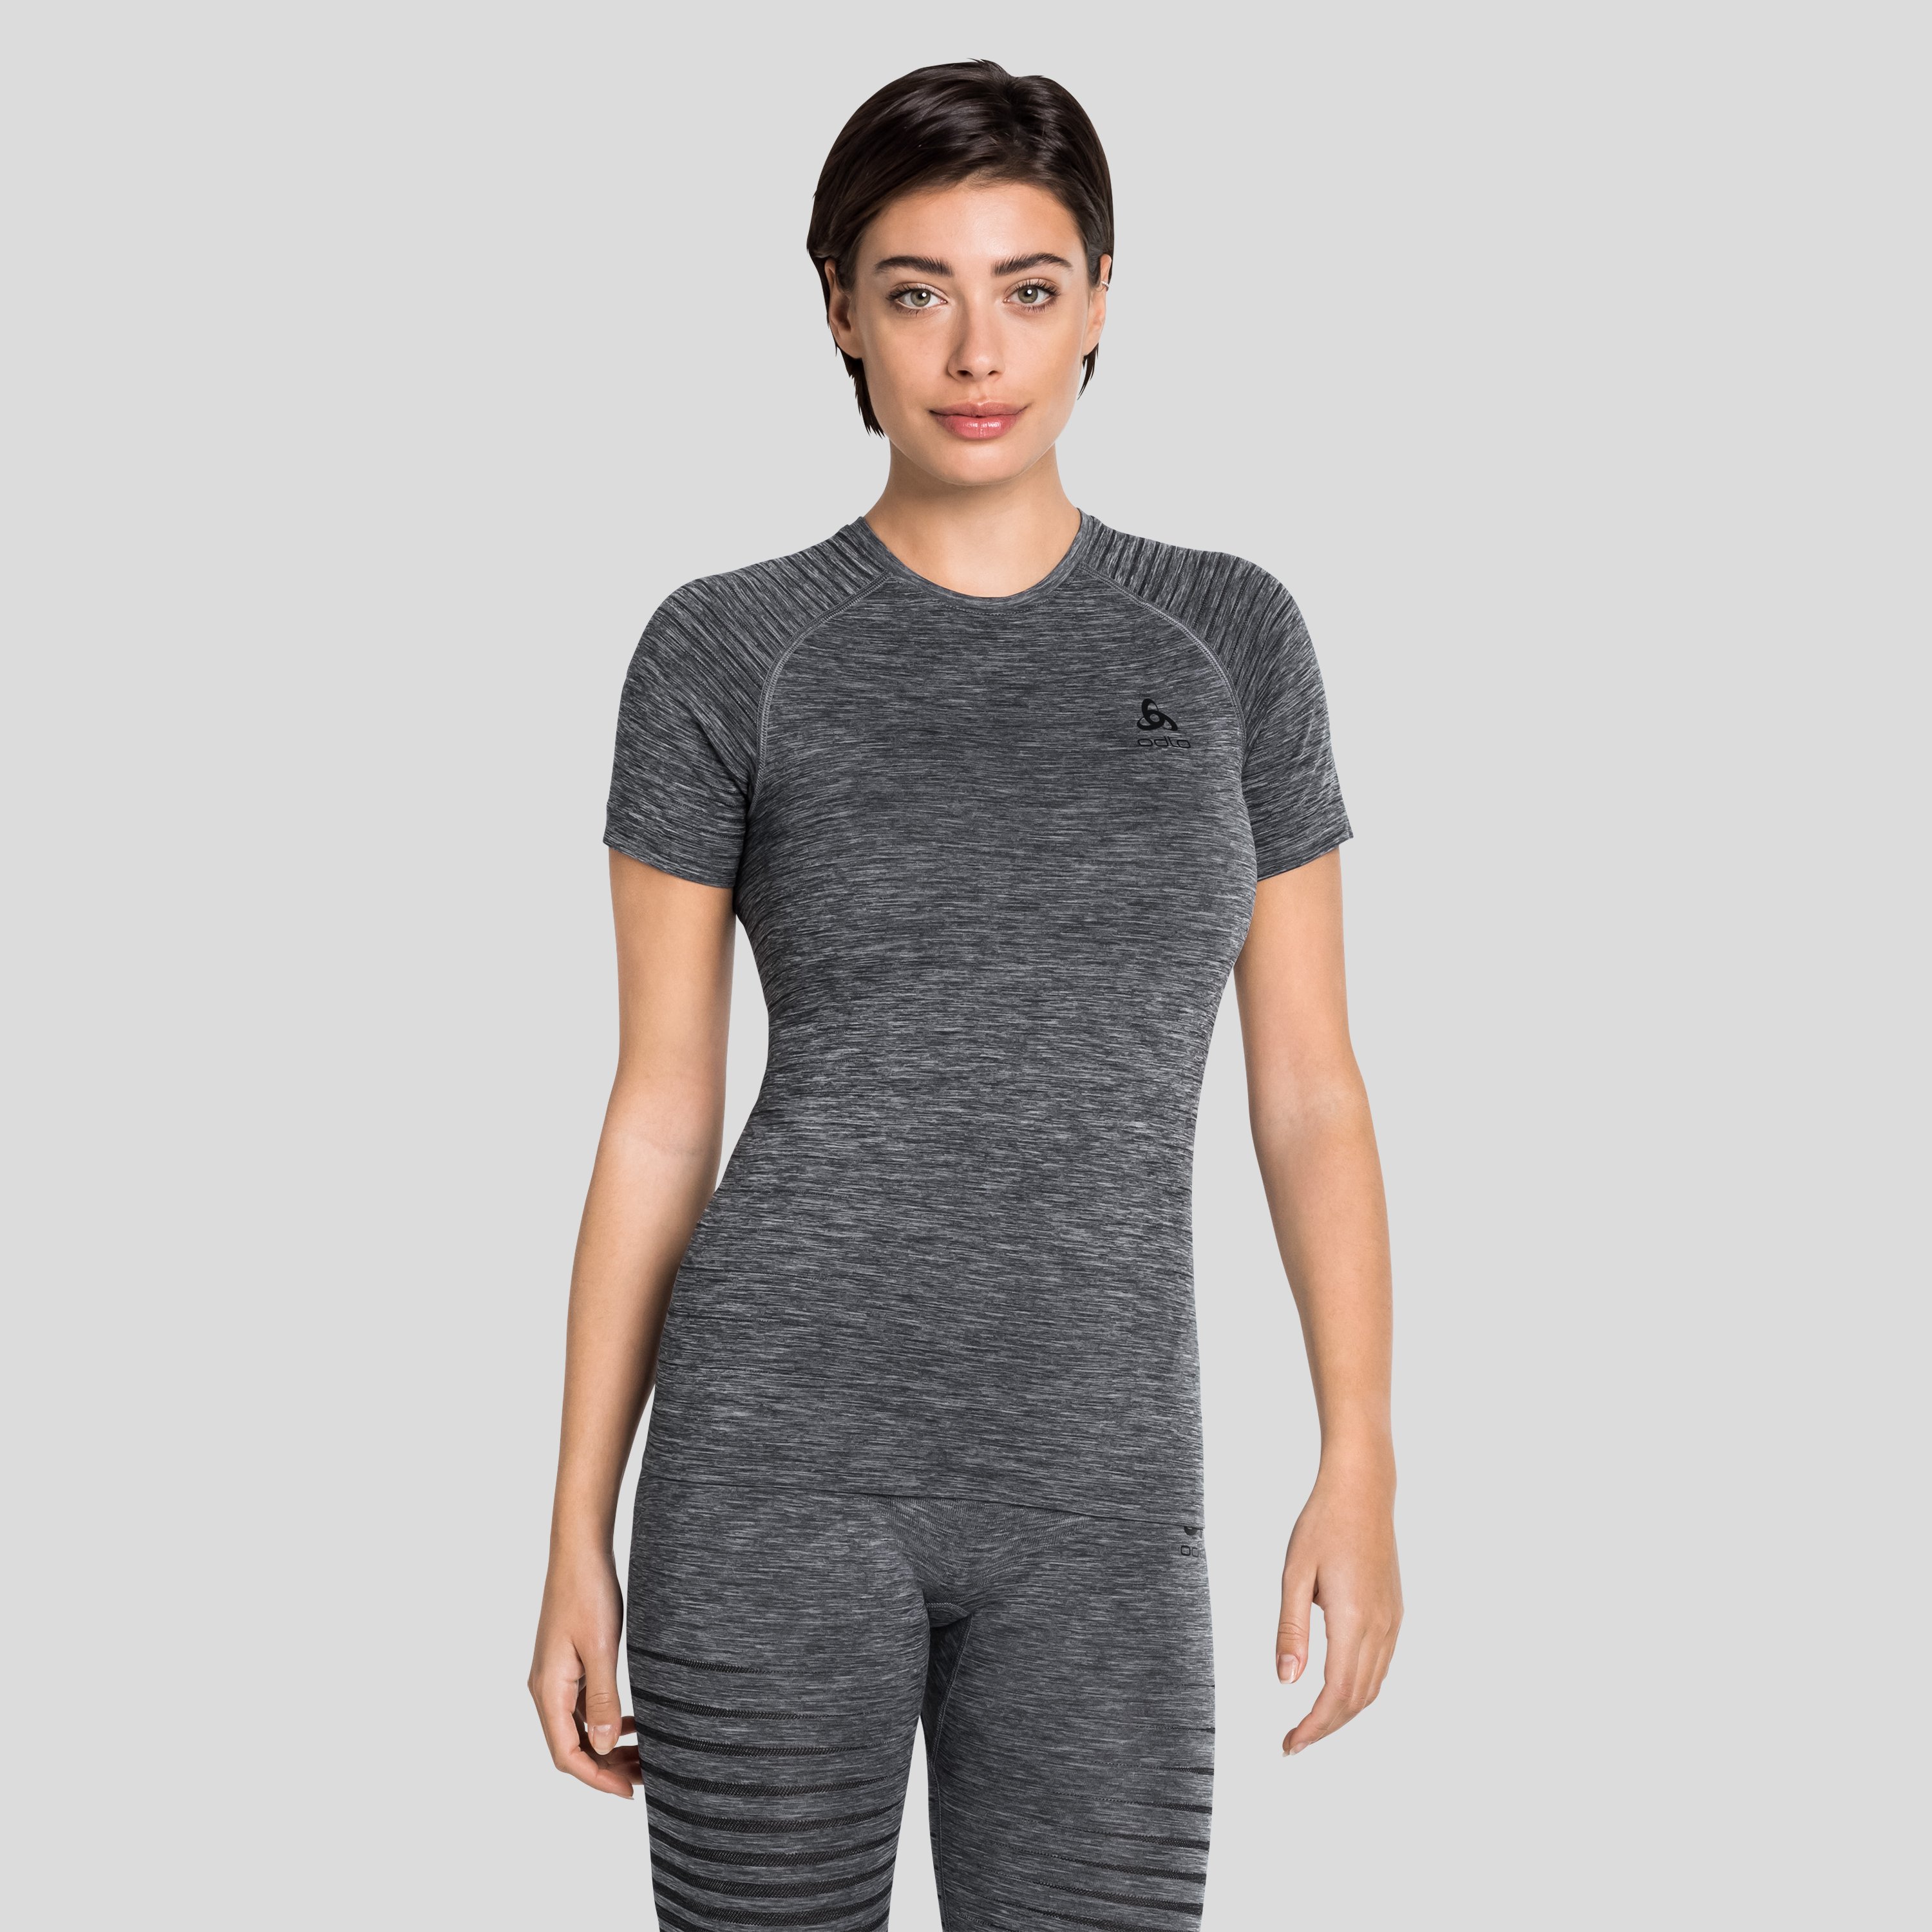 ODLO Performance Light Base Layer T-Shirt für Damen, M, grau